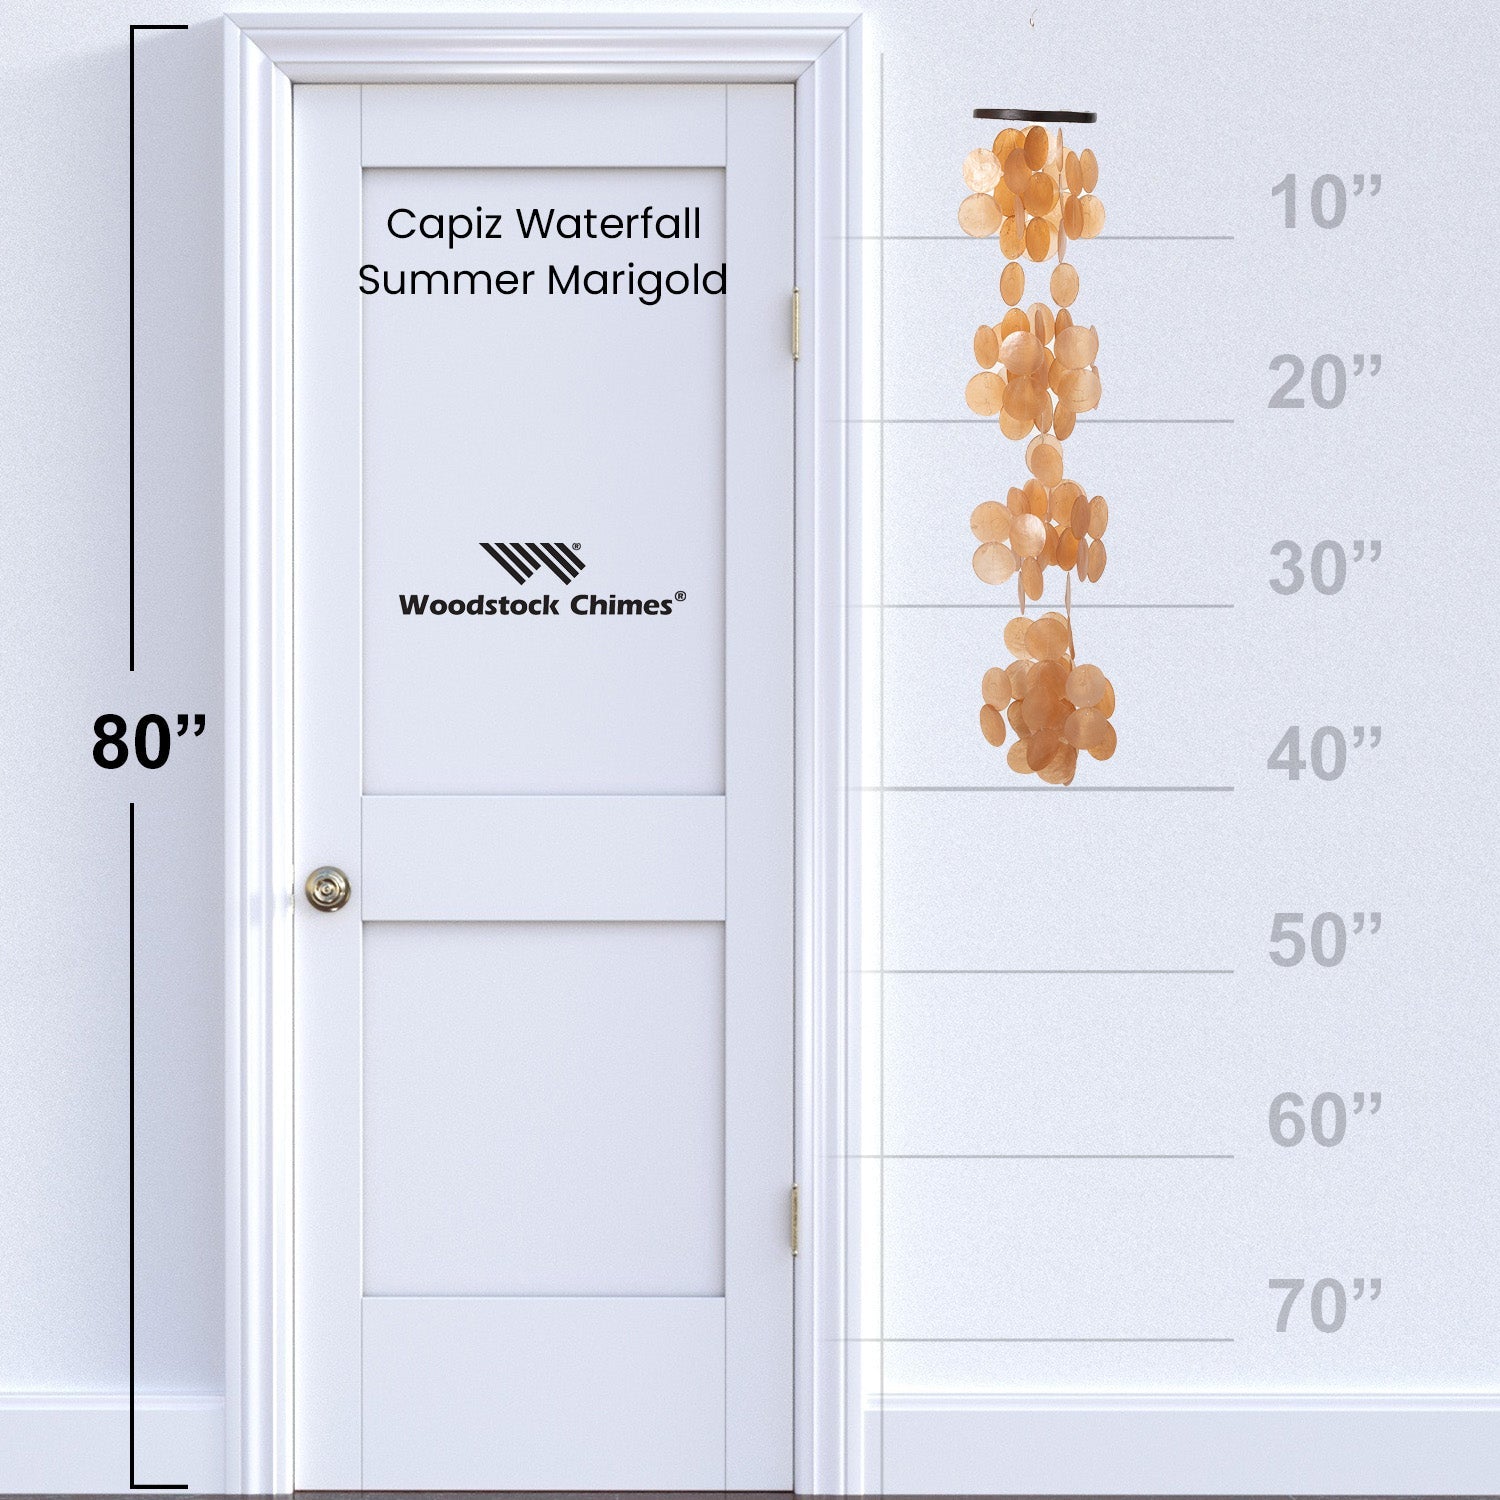 Capiz Waterfall - Summer Marigold proportion image